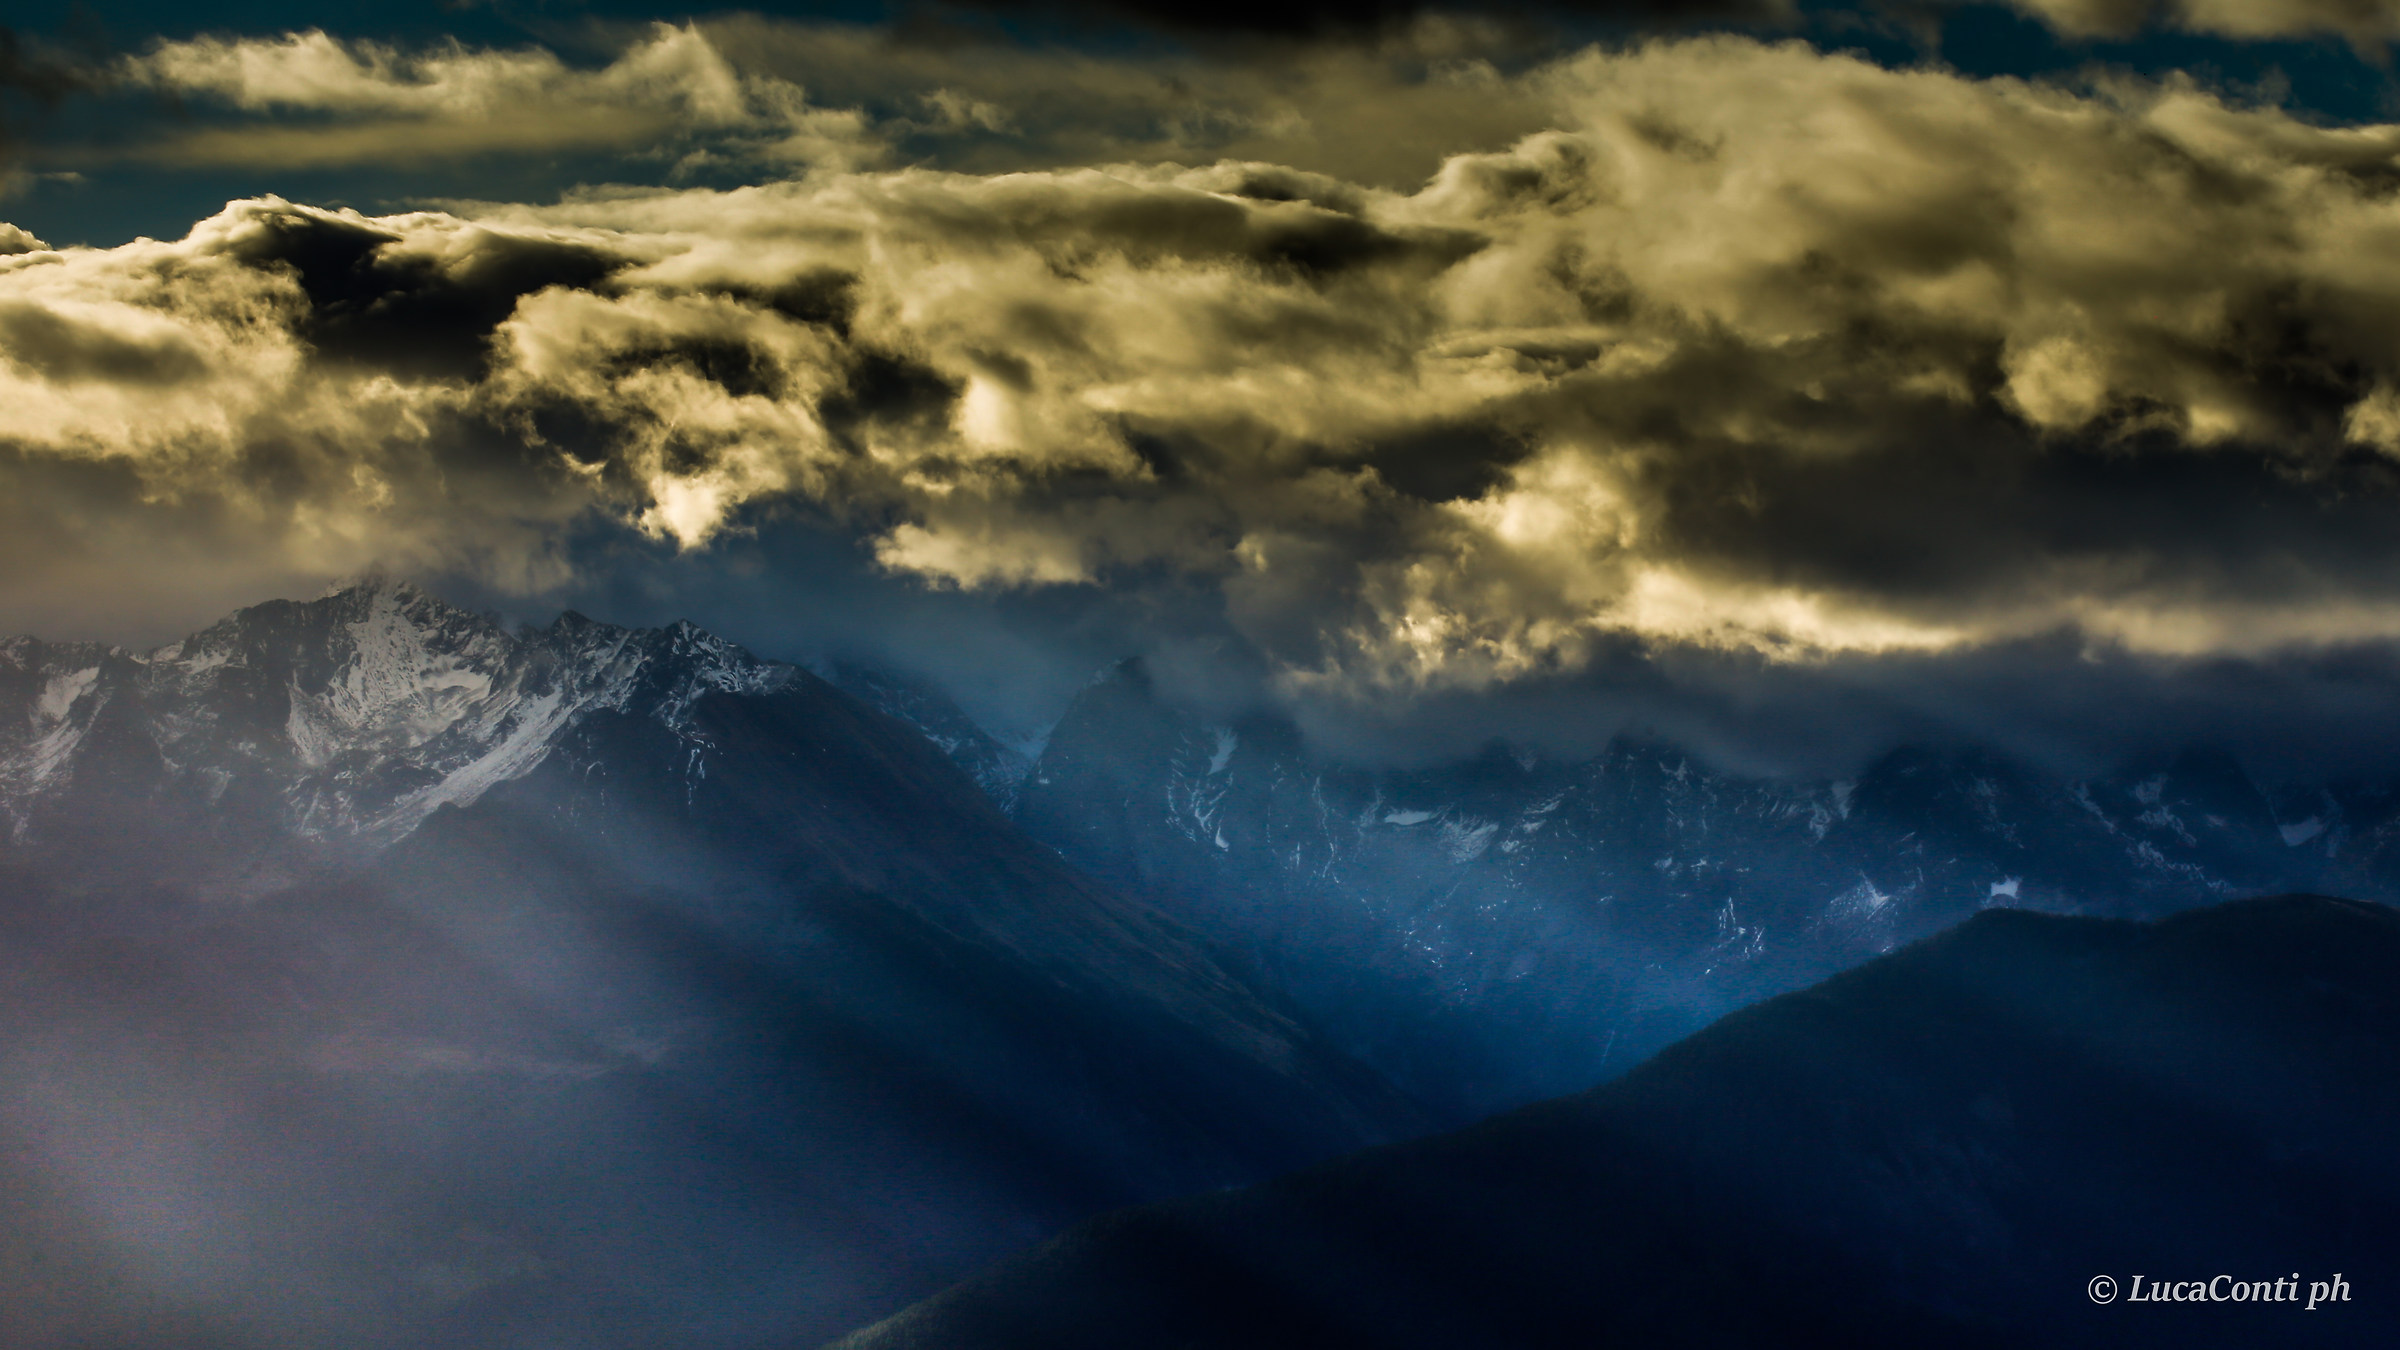 Valtellina, Autumn set of lights, clouds and mists...